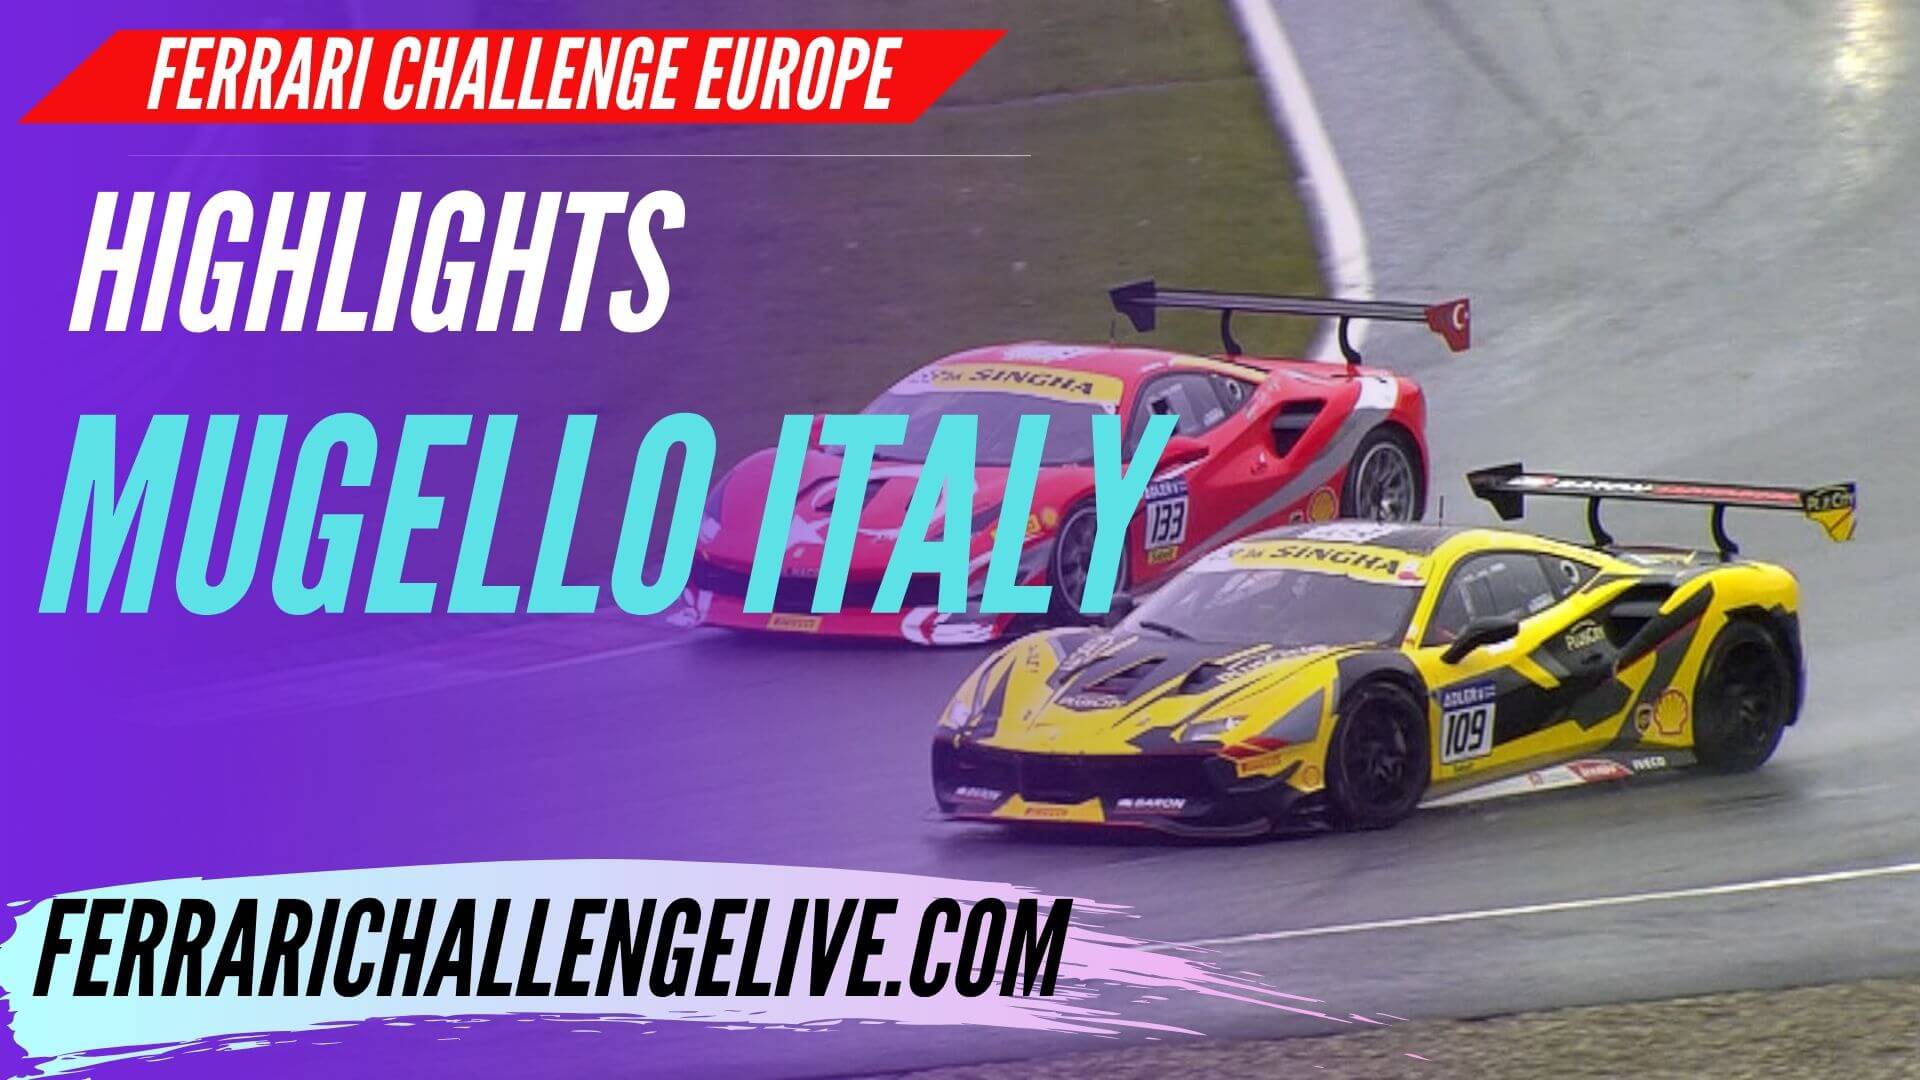 Italy Mugello Ferrari Challenge Europe Highlights 2019